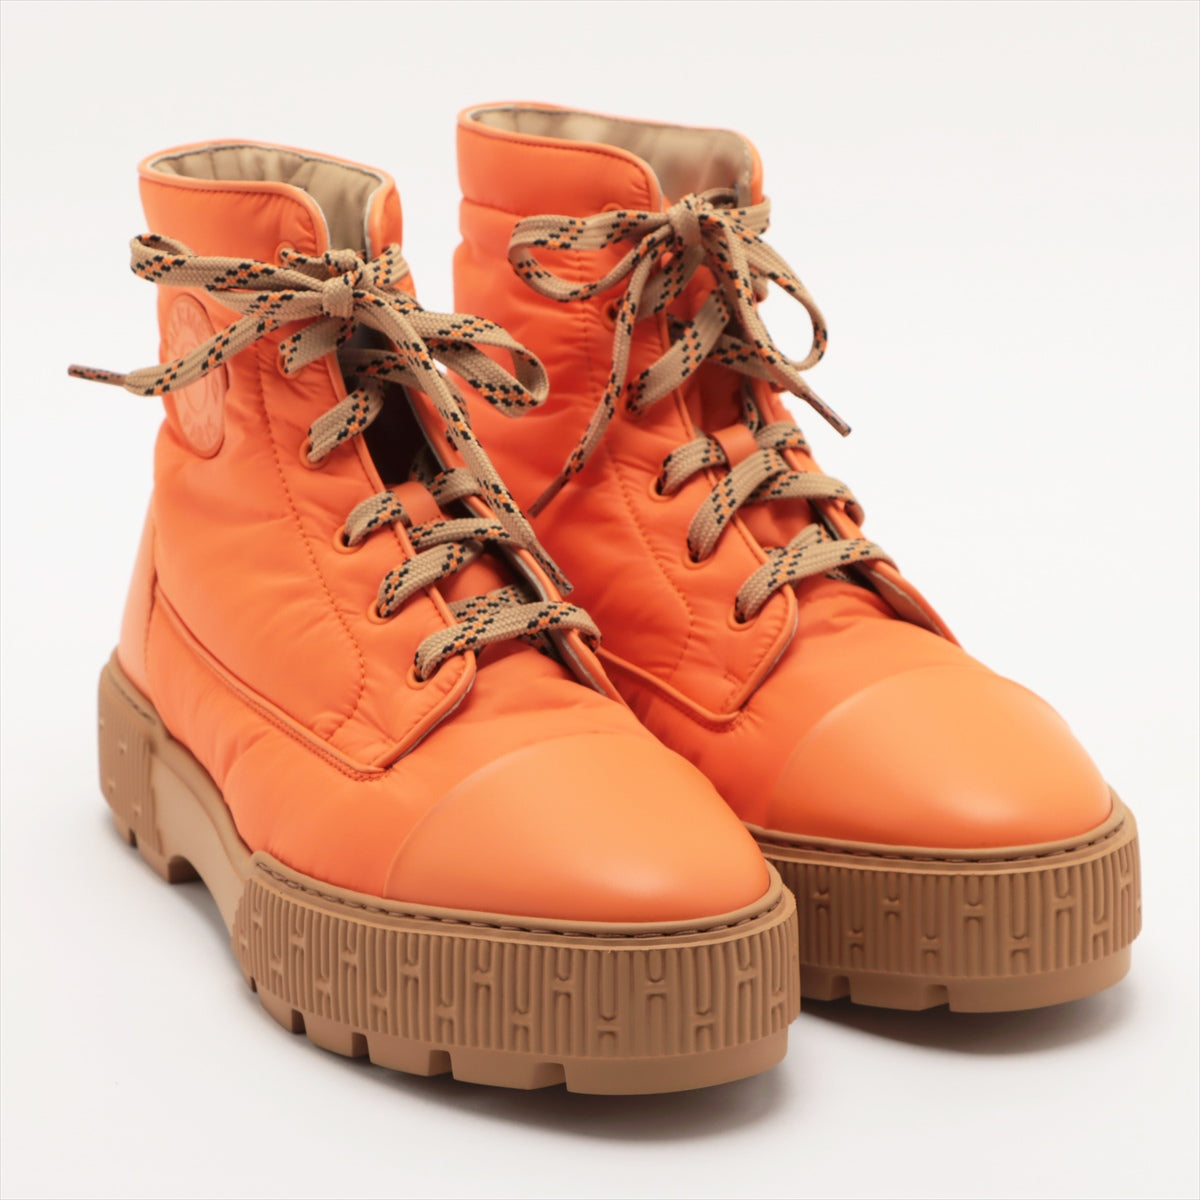 Hermès fresh Nylon & Leather Boots 42 Men's Beige x orange Replacement Laces Included